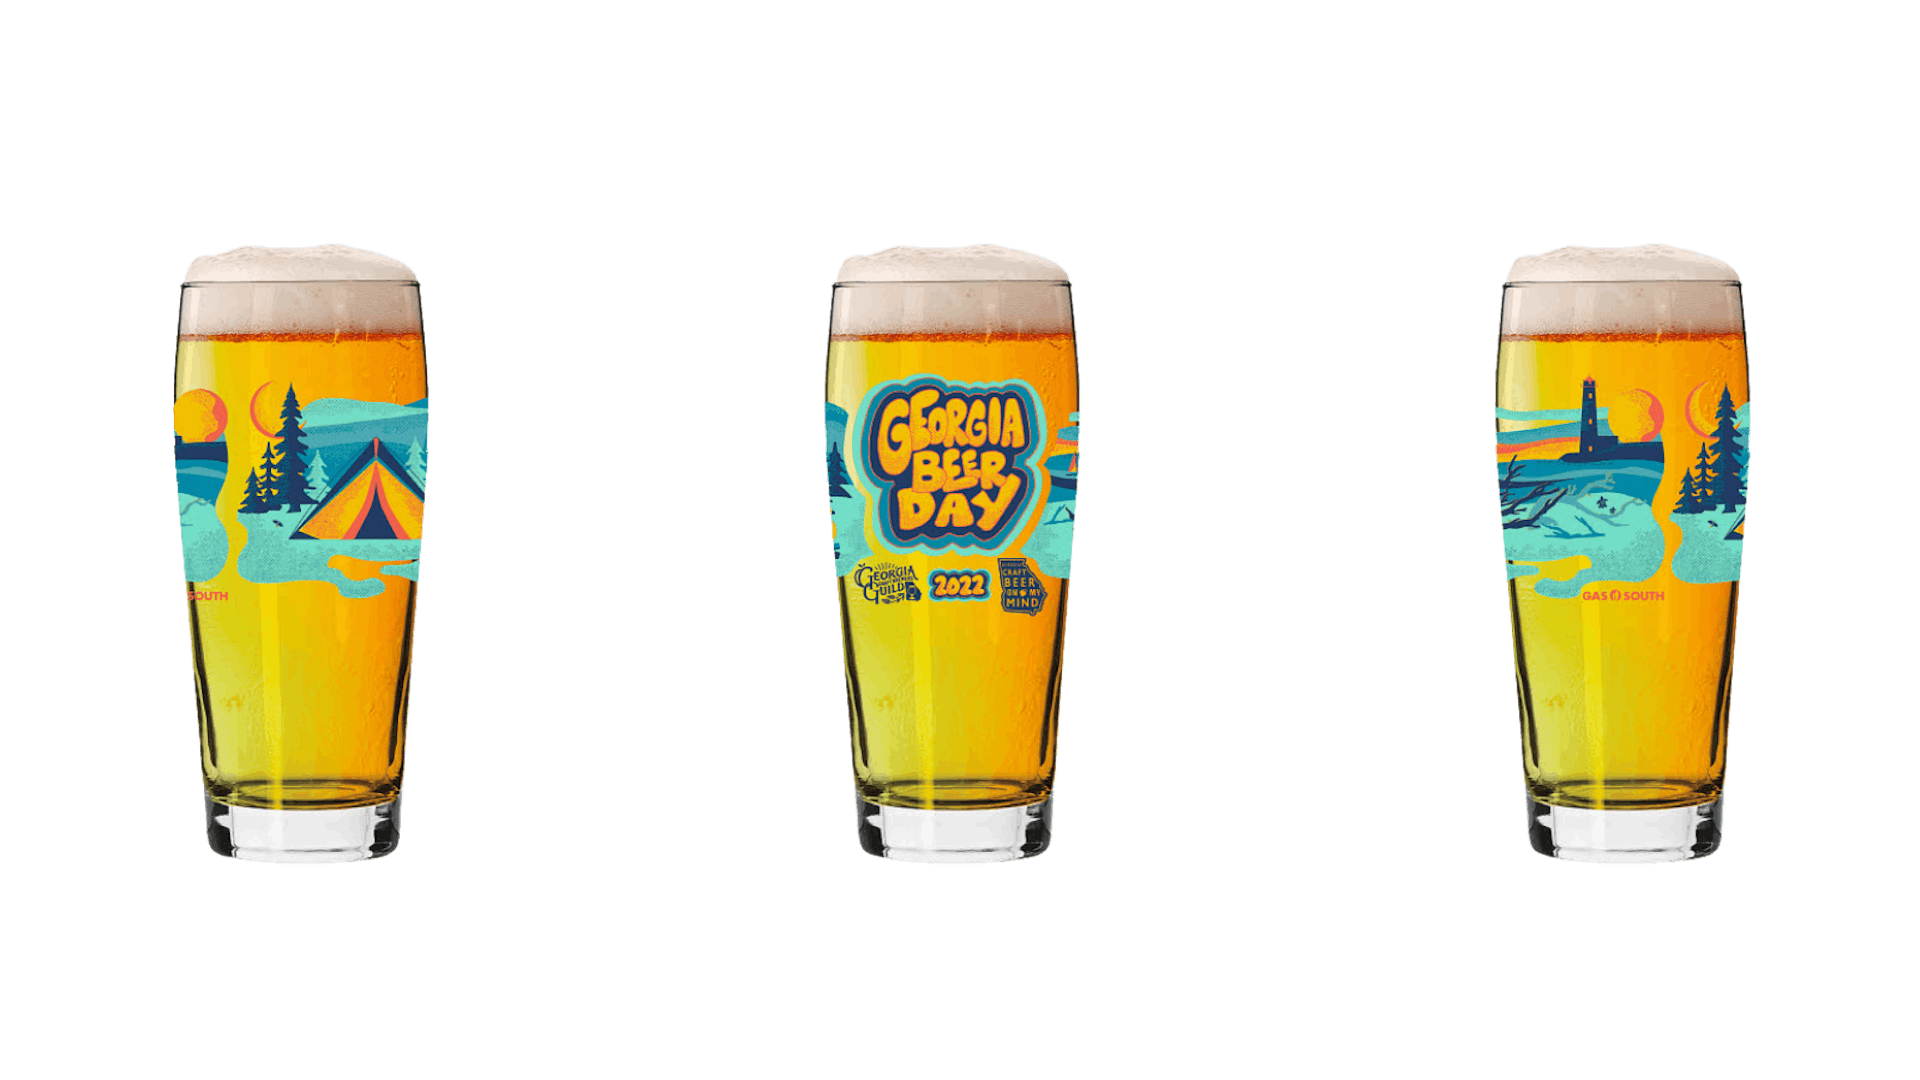 GA Beer Day Glass Banner